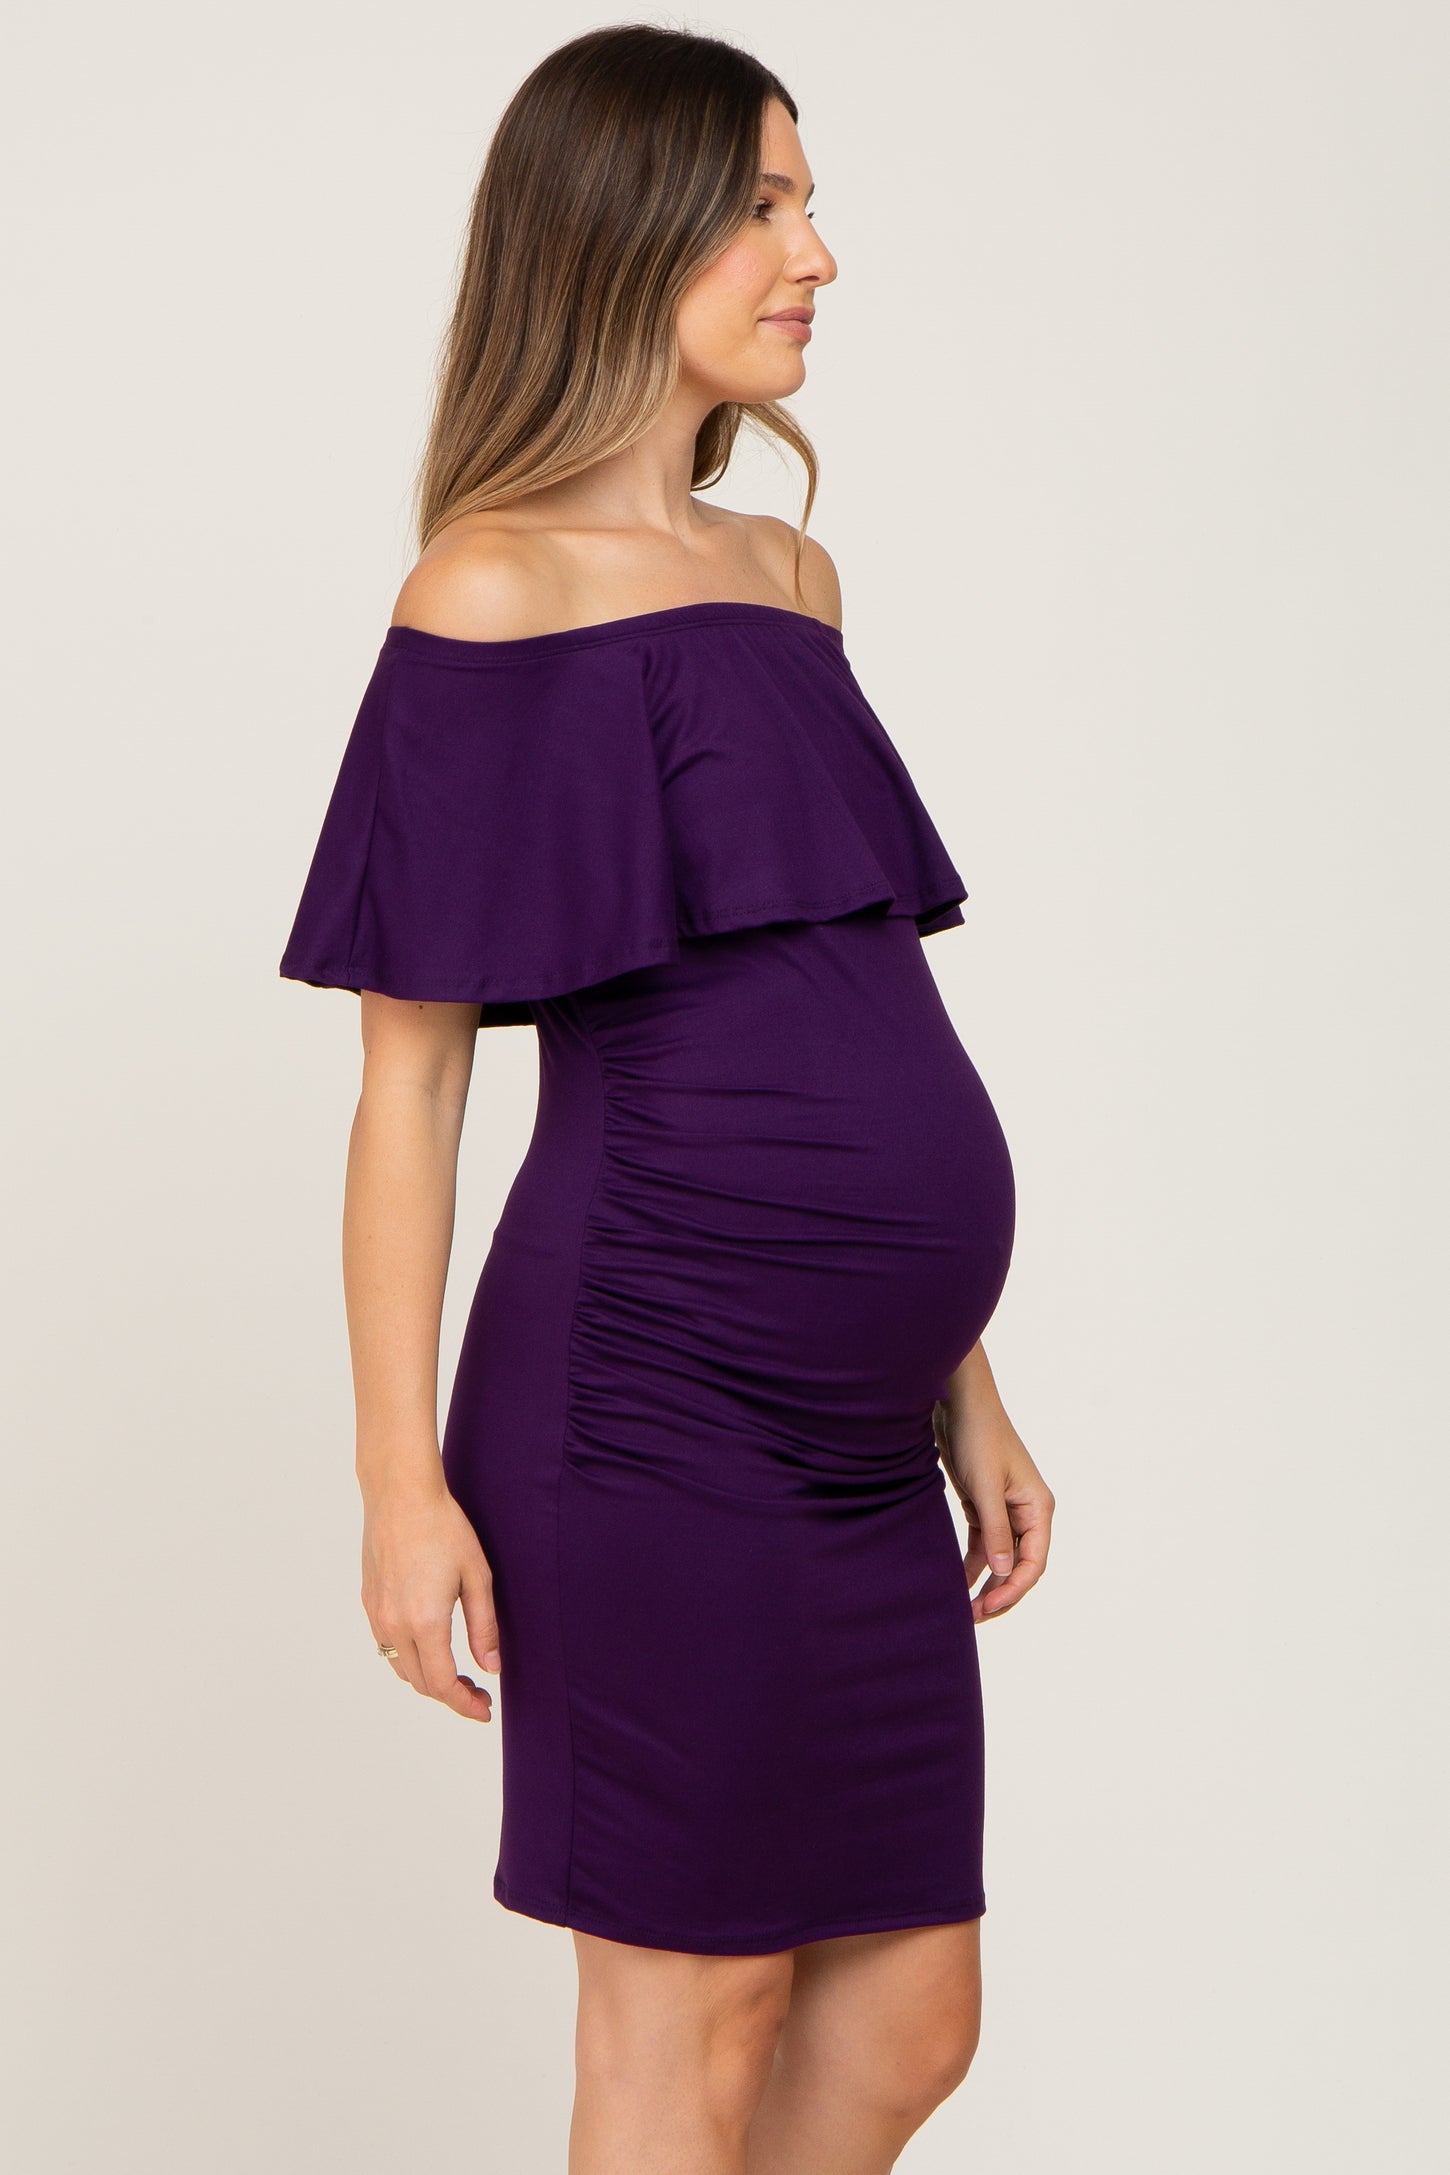 maternity cocktail dresses